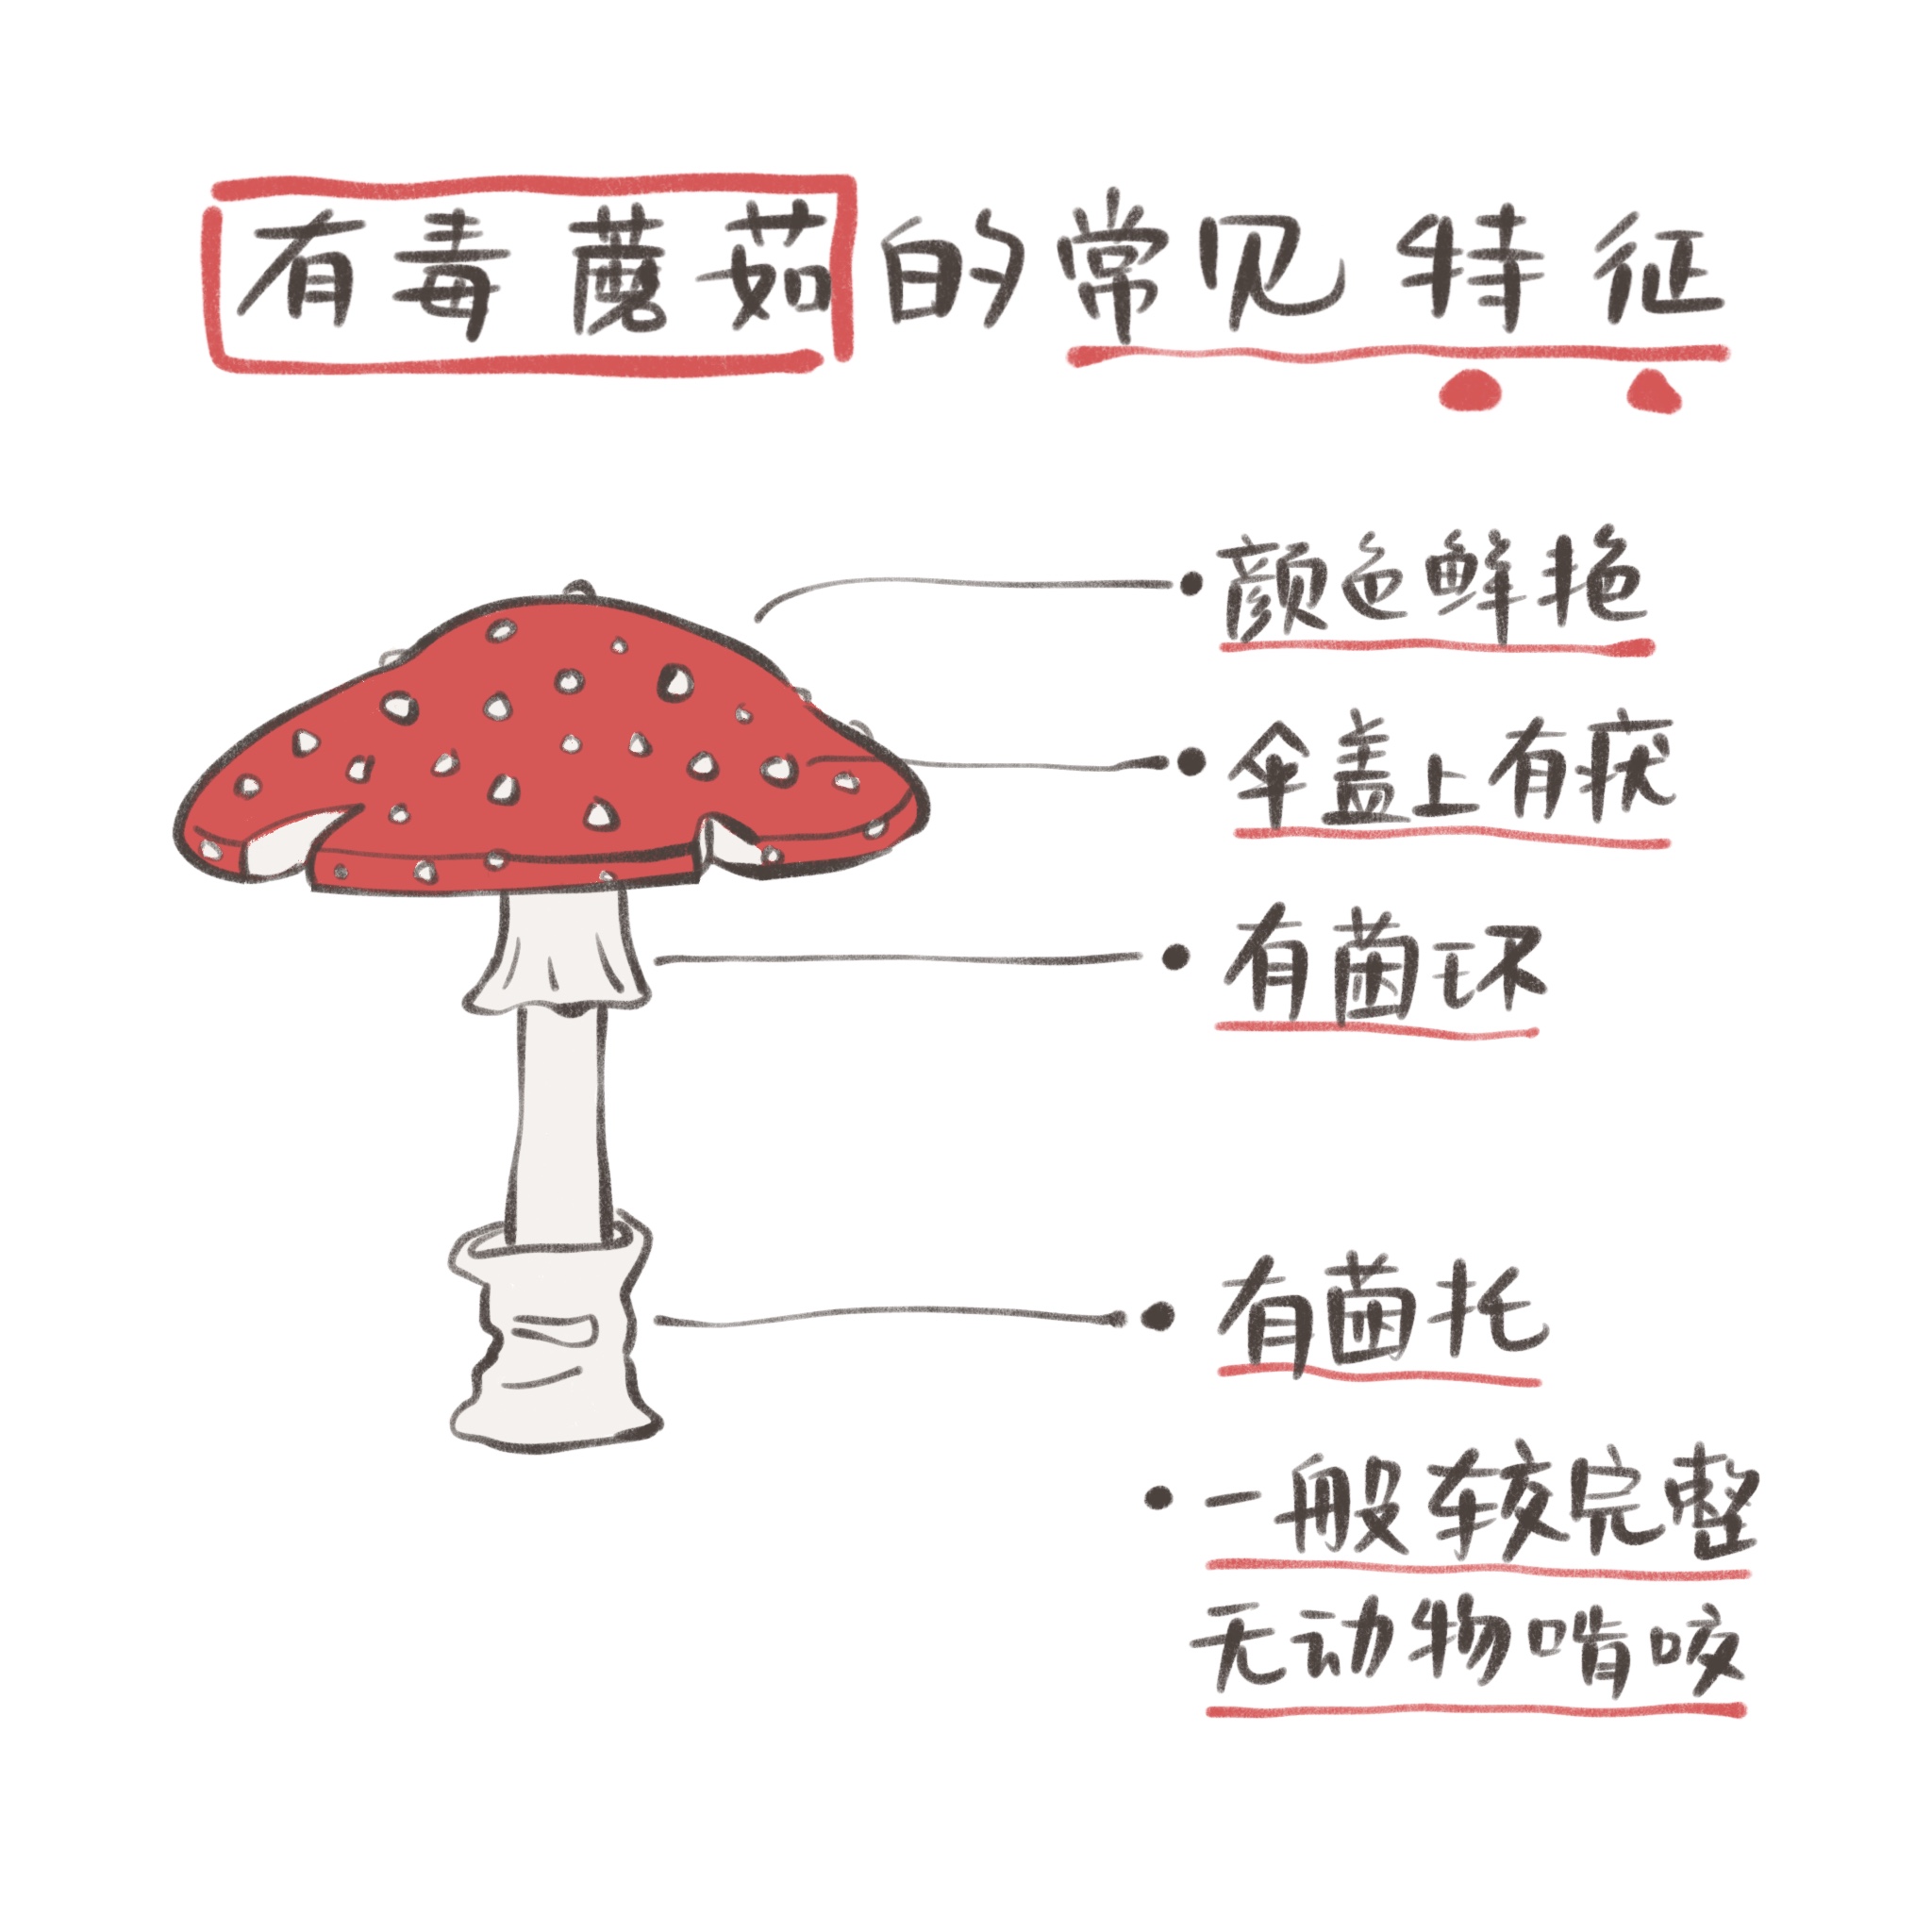 toxic mushroom features 